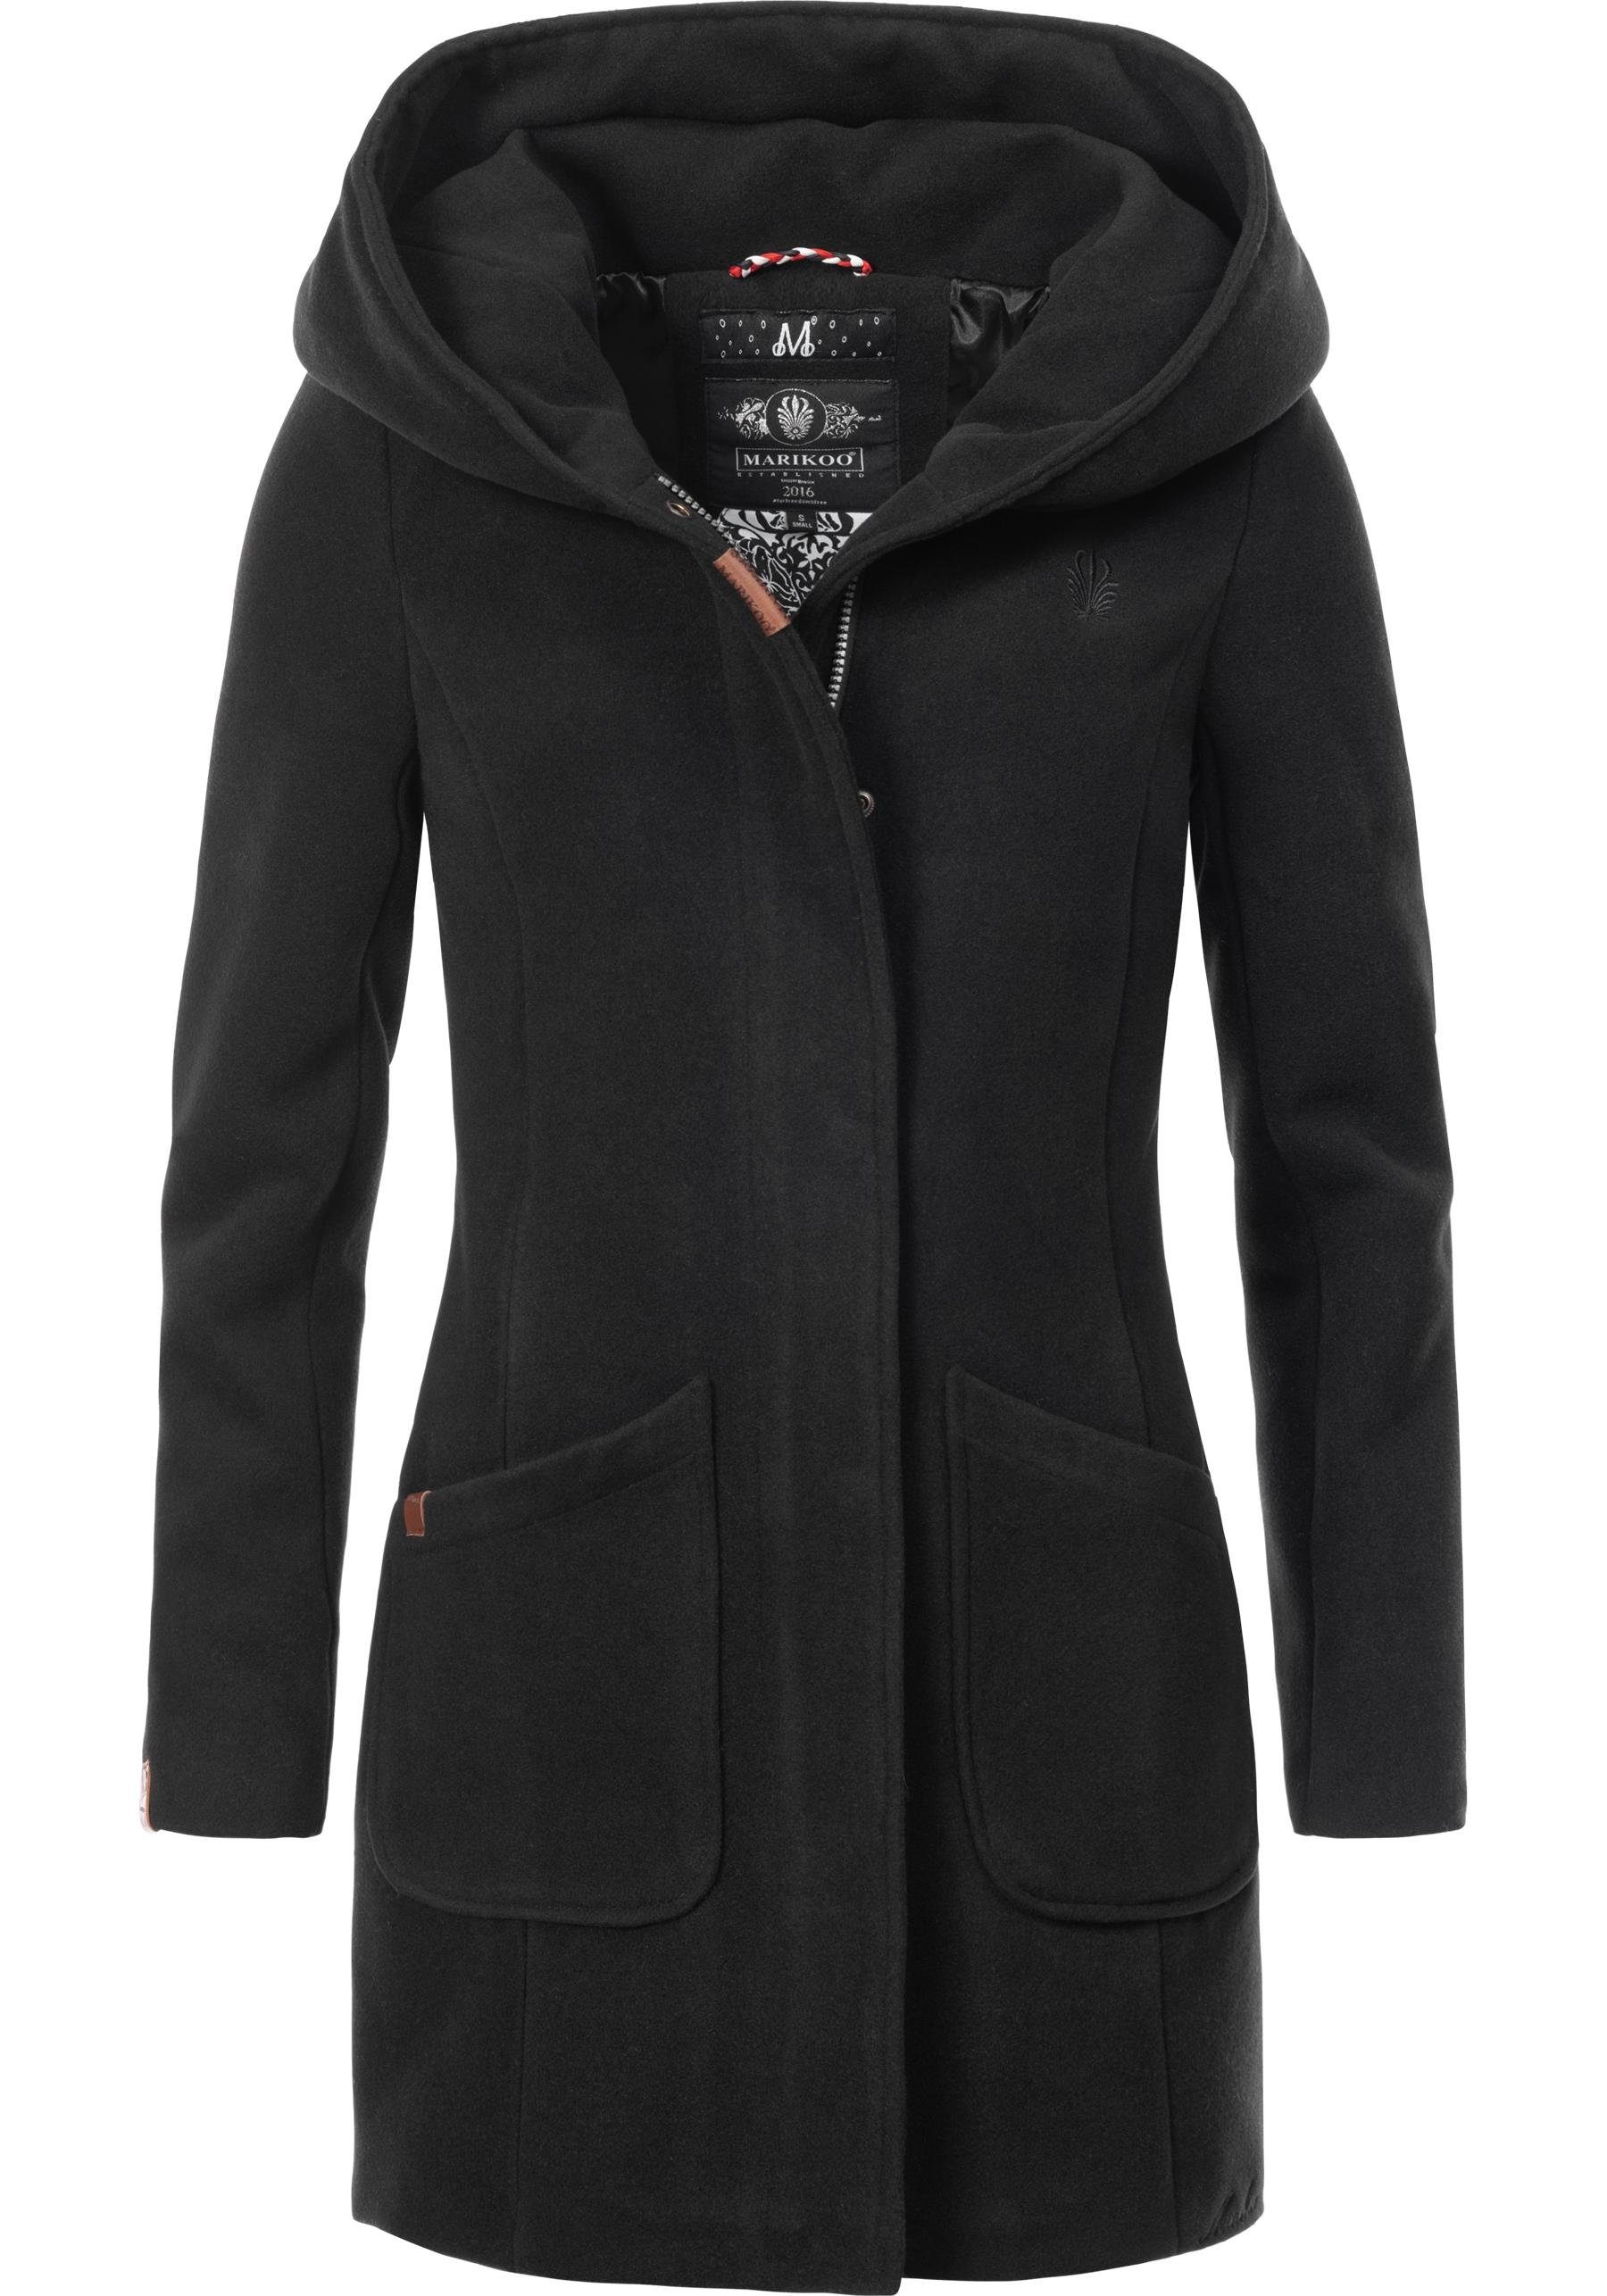 Marikoo Wintermantel Maikoo hochwertiger Mantel mit großer Kapuze